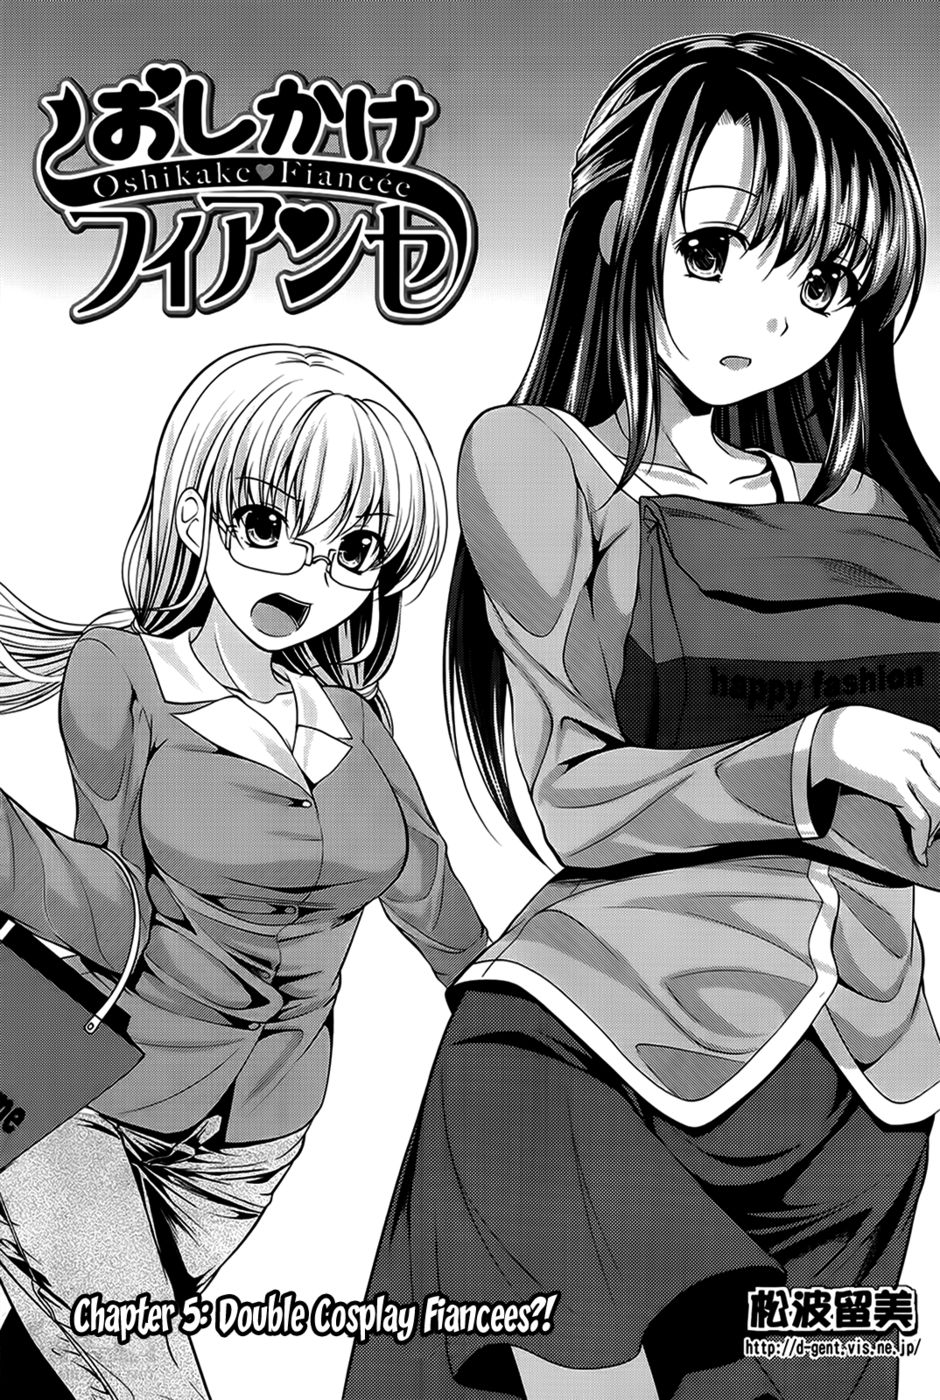 Hentai Manga Comic-Oshikake Fiancee-Chapter 5-2